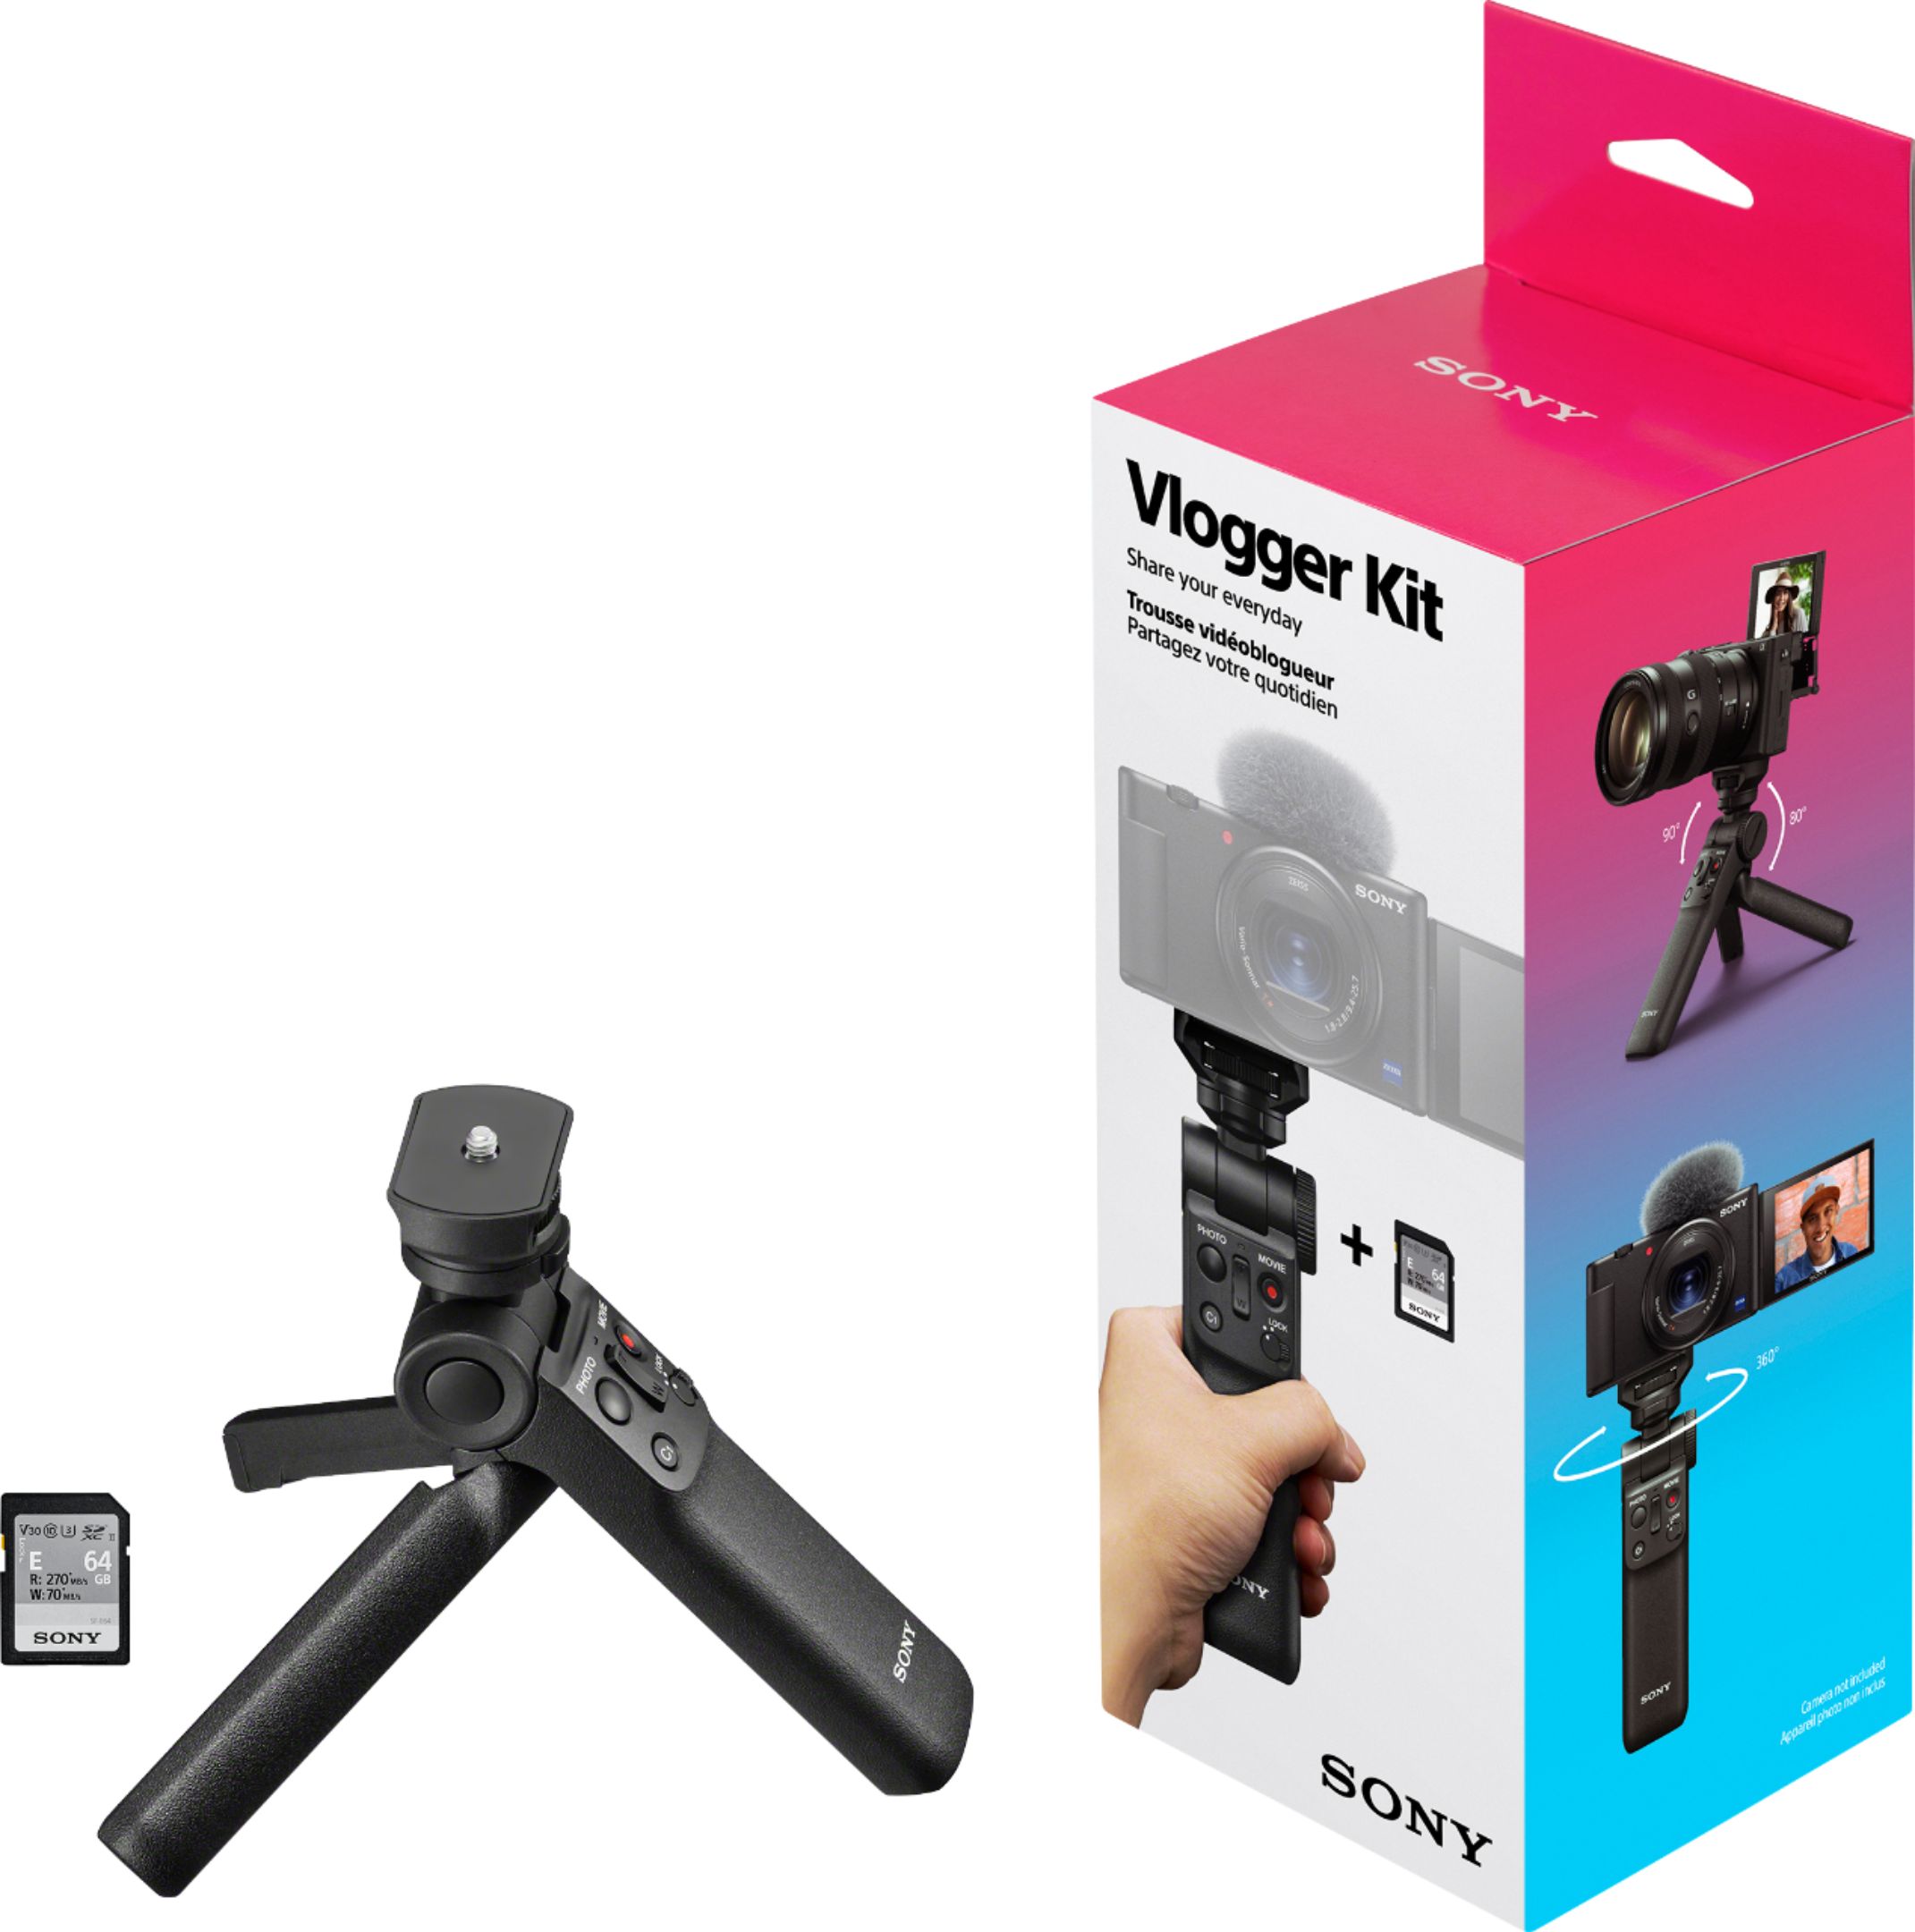 Sony ZV-1F Vlogging Camera with Vlogger Accessory Kit